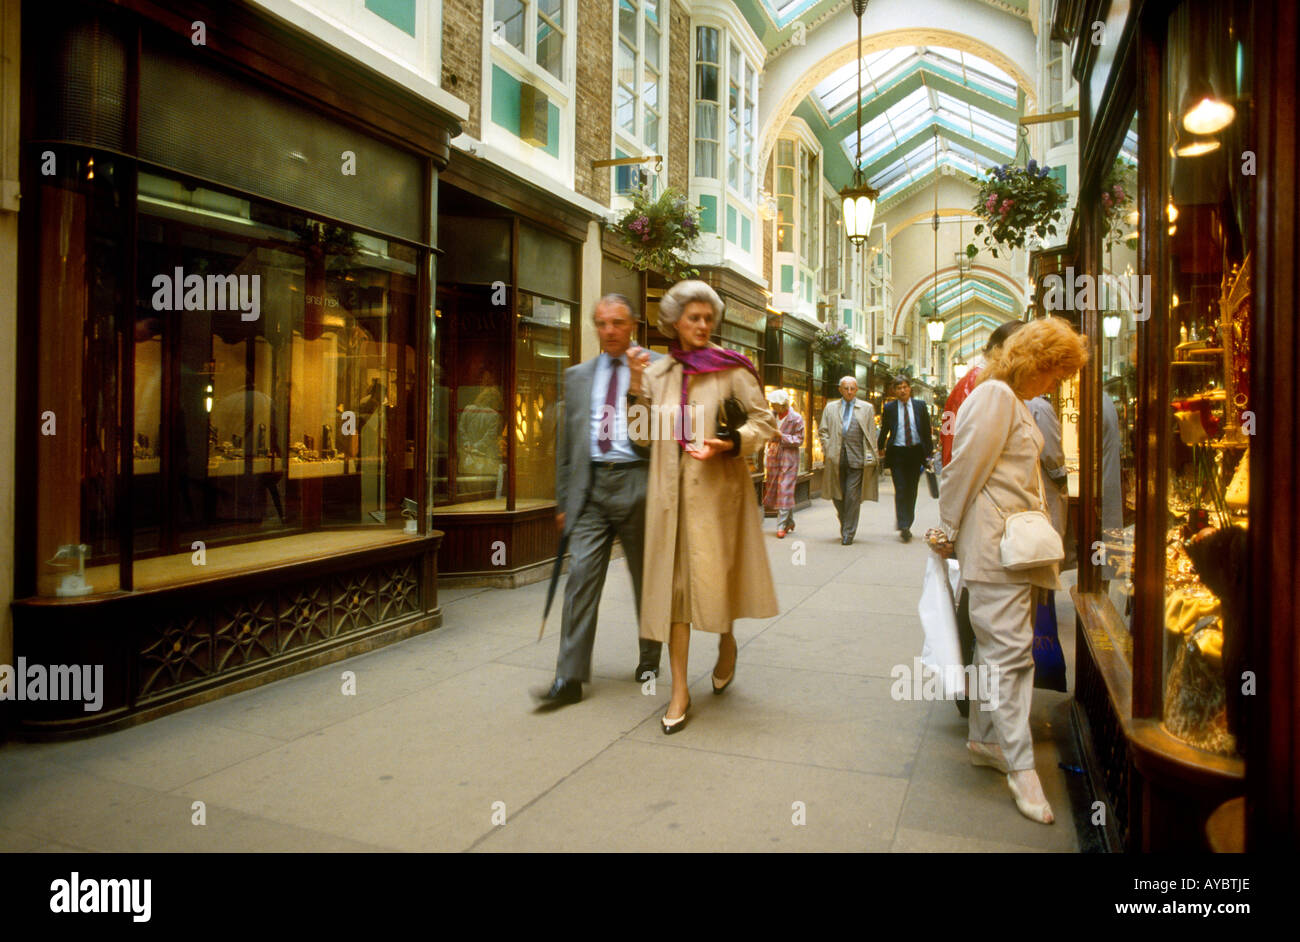 Man & woman strolling along historical exclusive shopping arcade Burlington Arcade, Mayfair linked to Savile Row tailors London Stock Photo